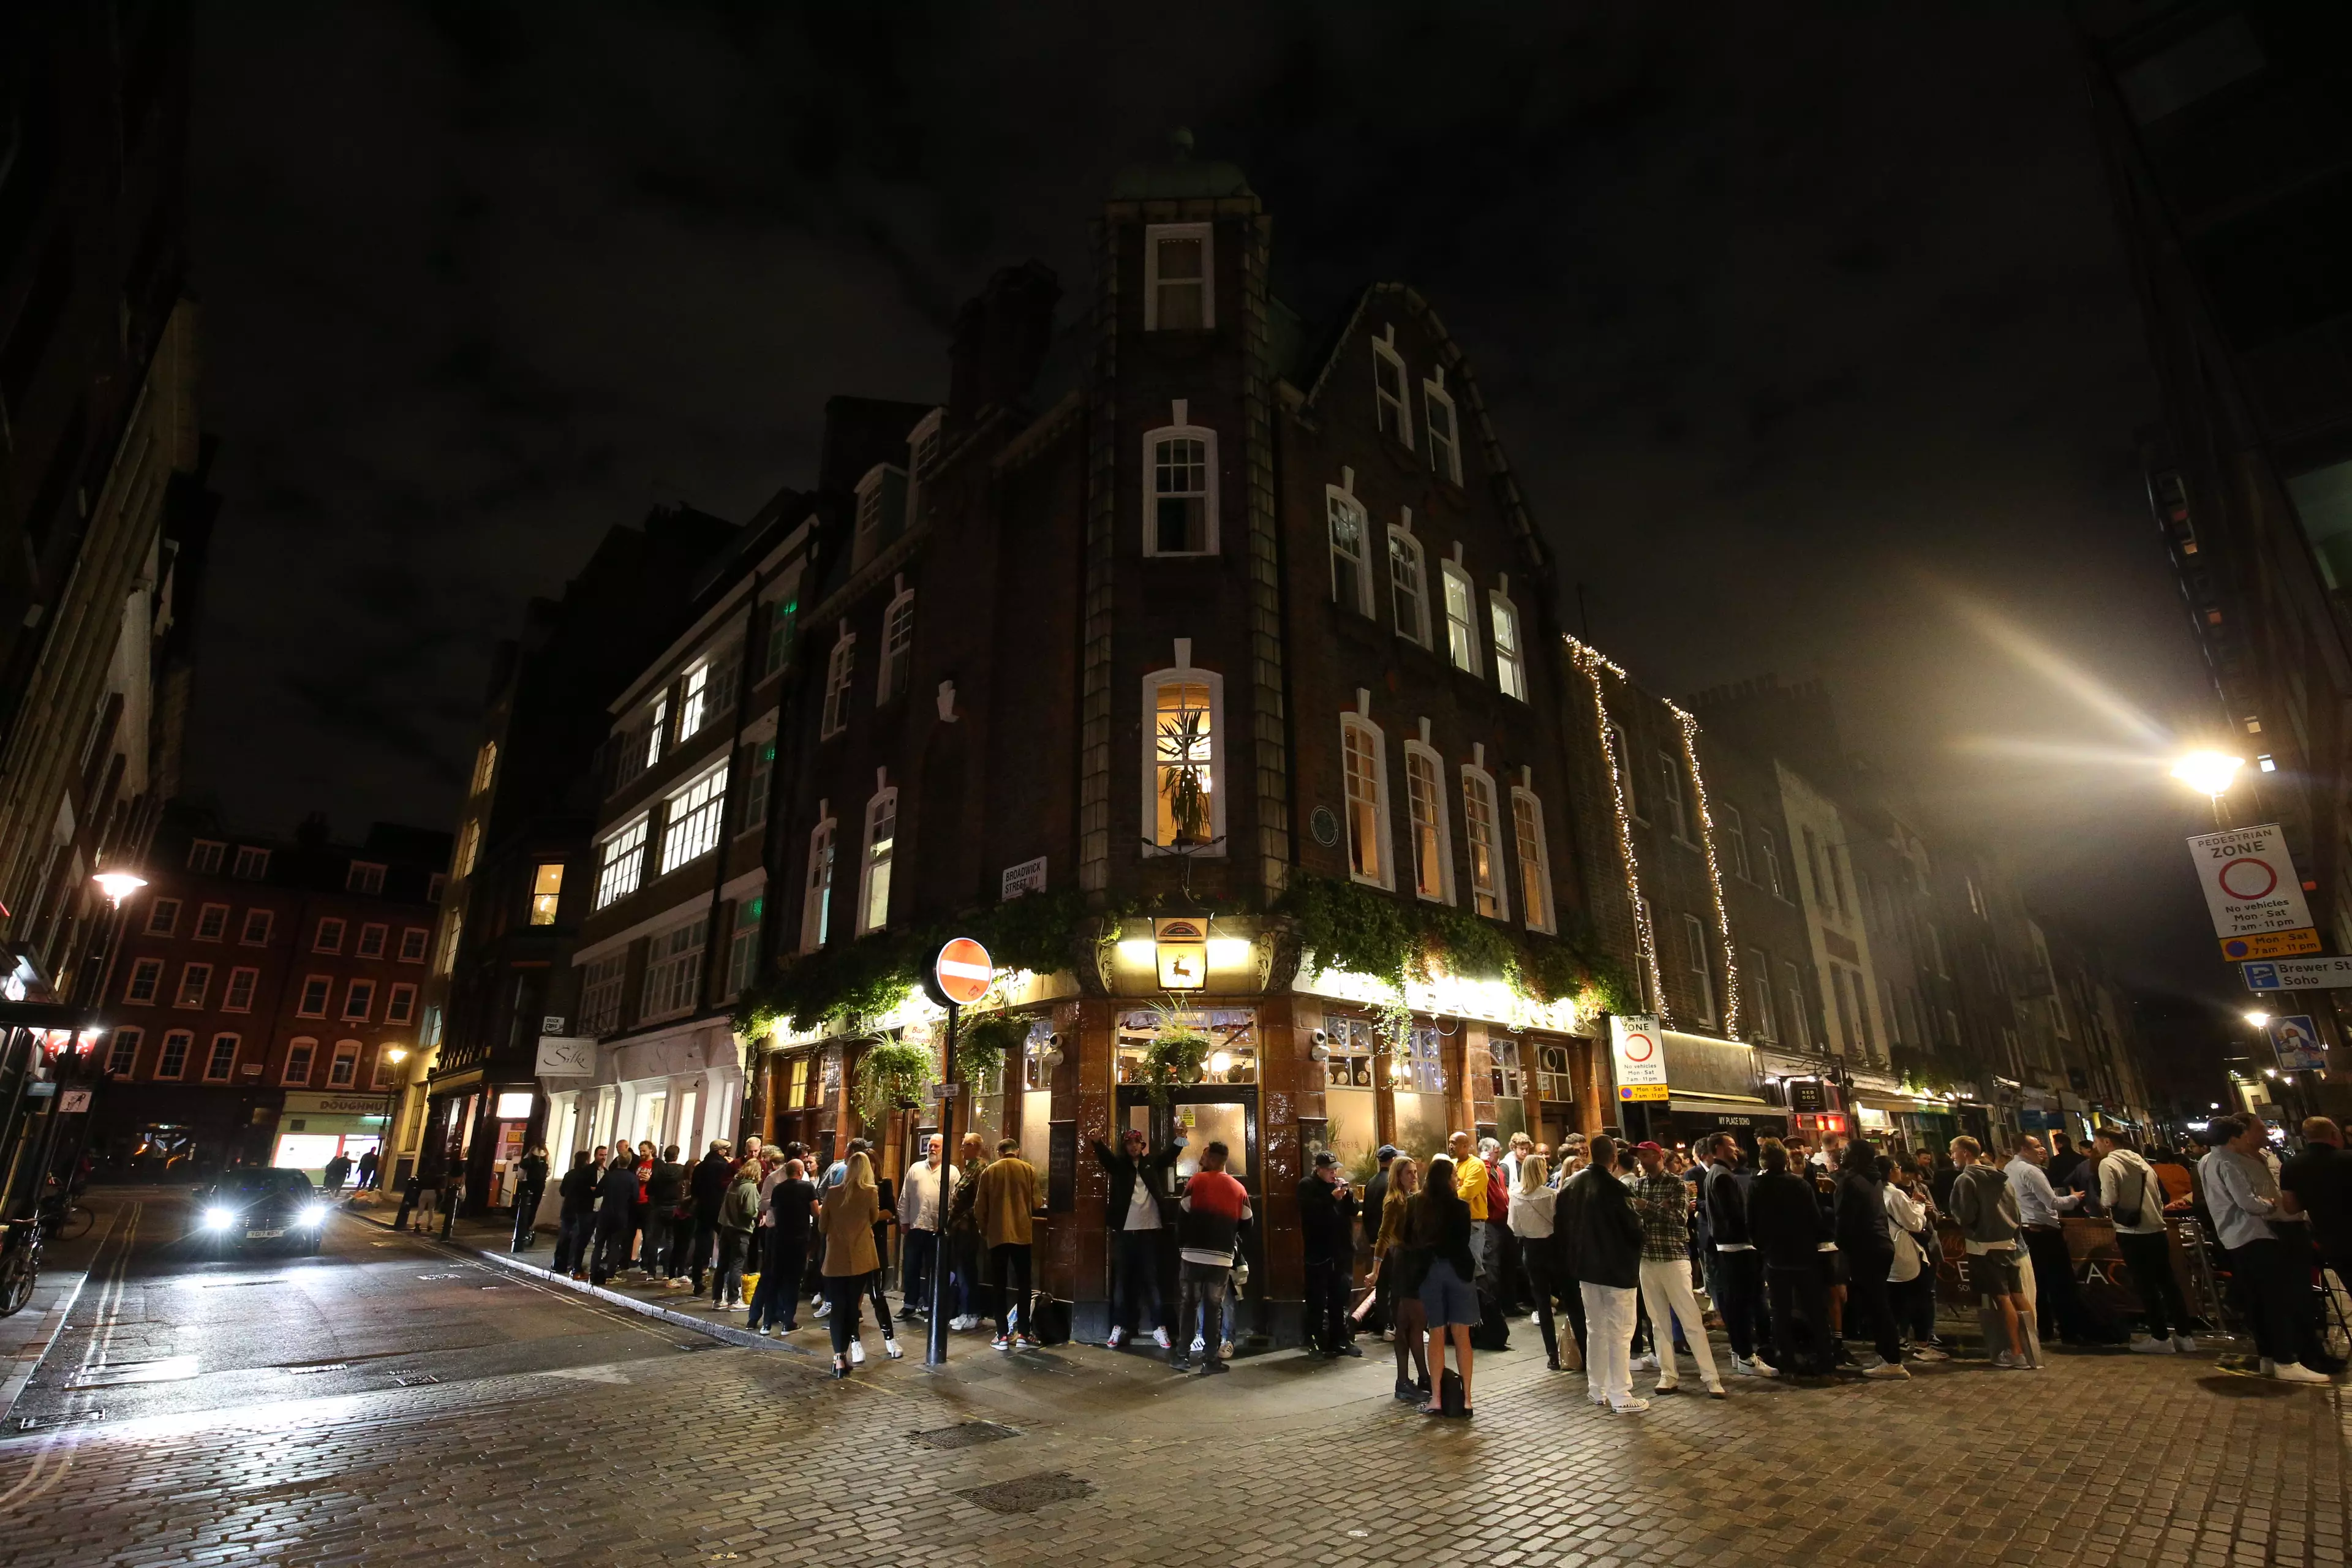 Crowds outside a London pub.